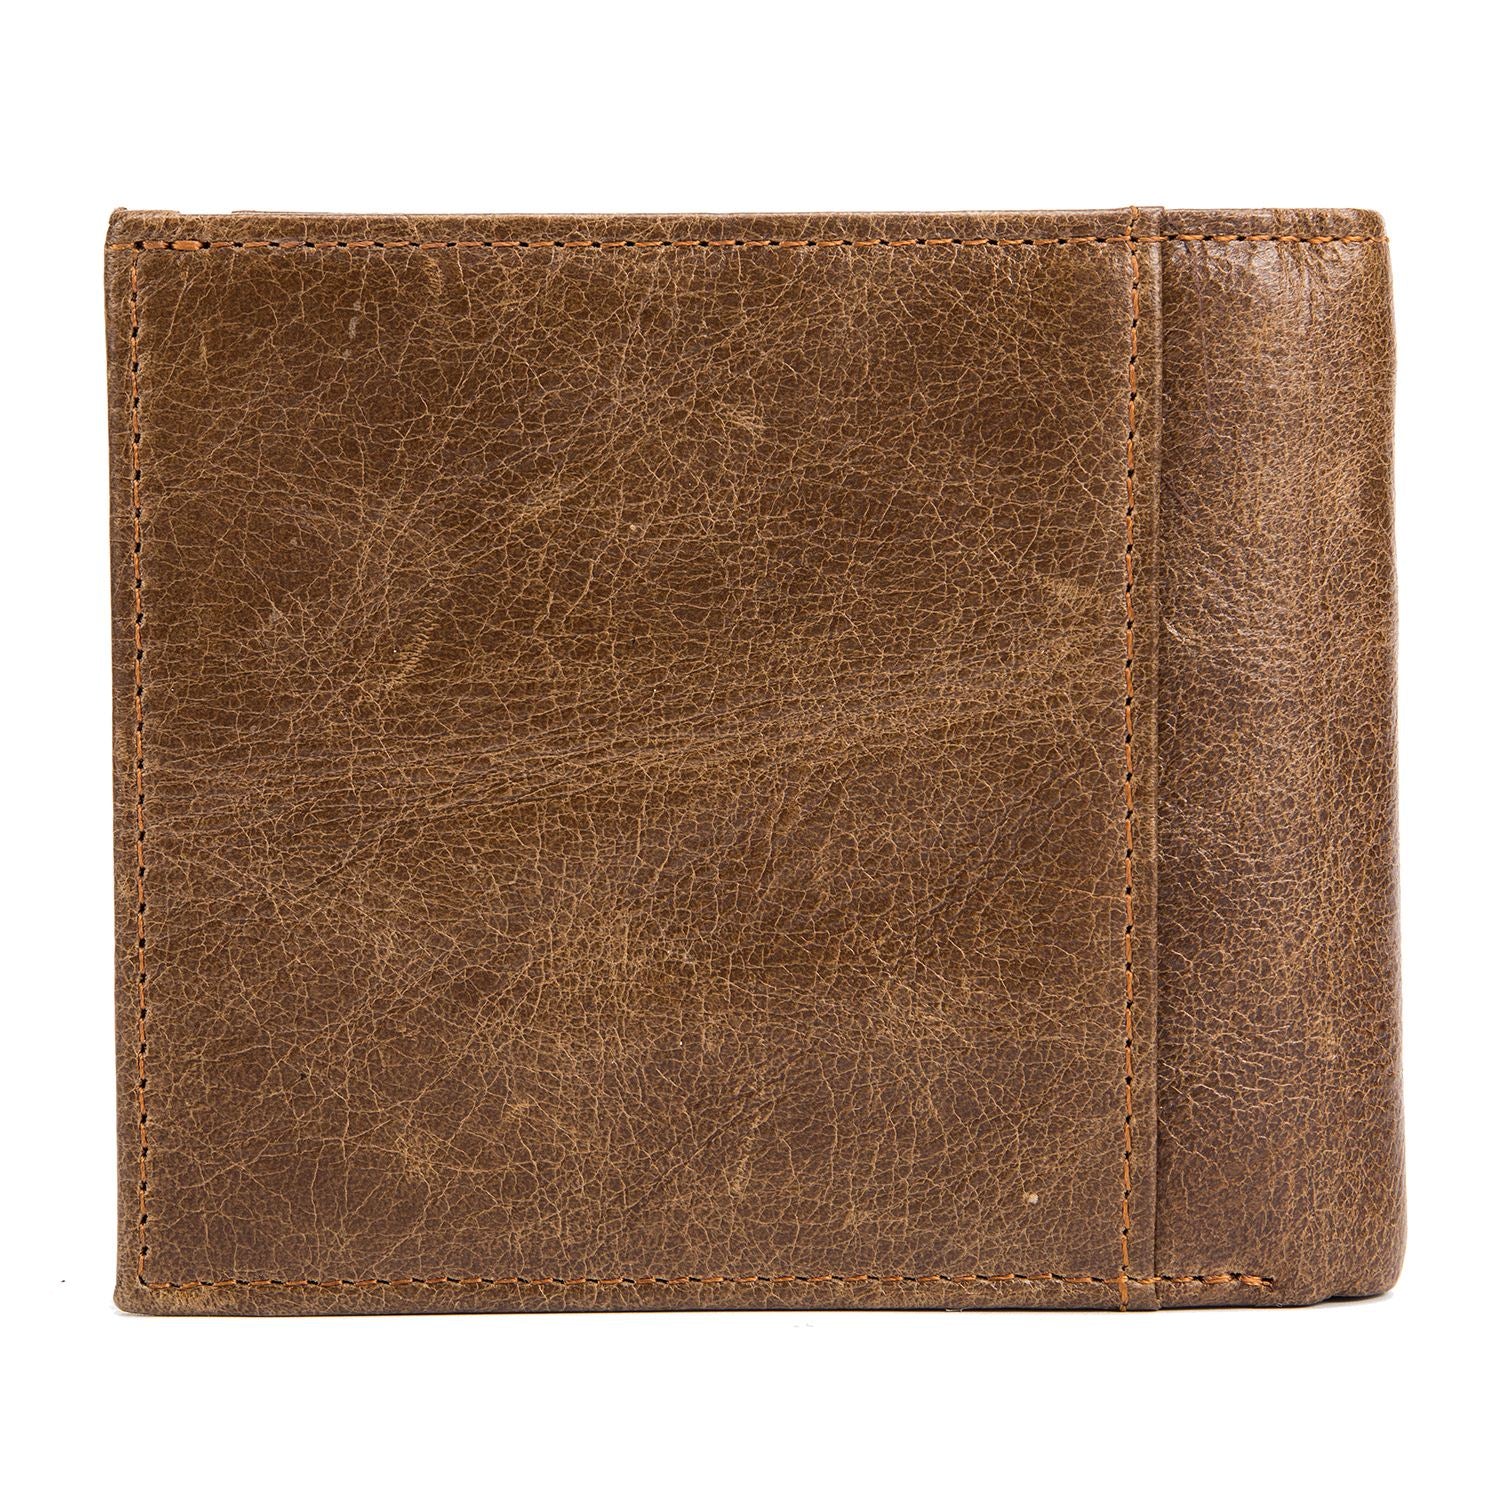 BULLCAPTAIN Genuine Leather Men Wallets Credit Business Card Holders Zipper Cowhide Leather Wallet Purse - ebowsos